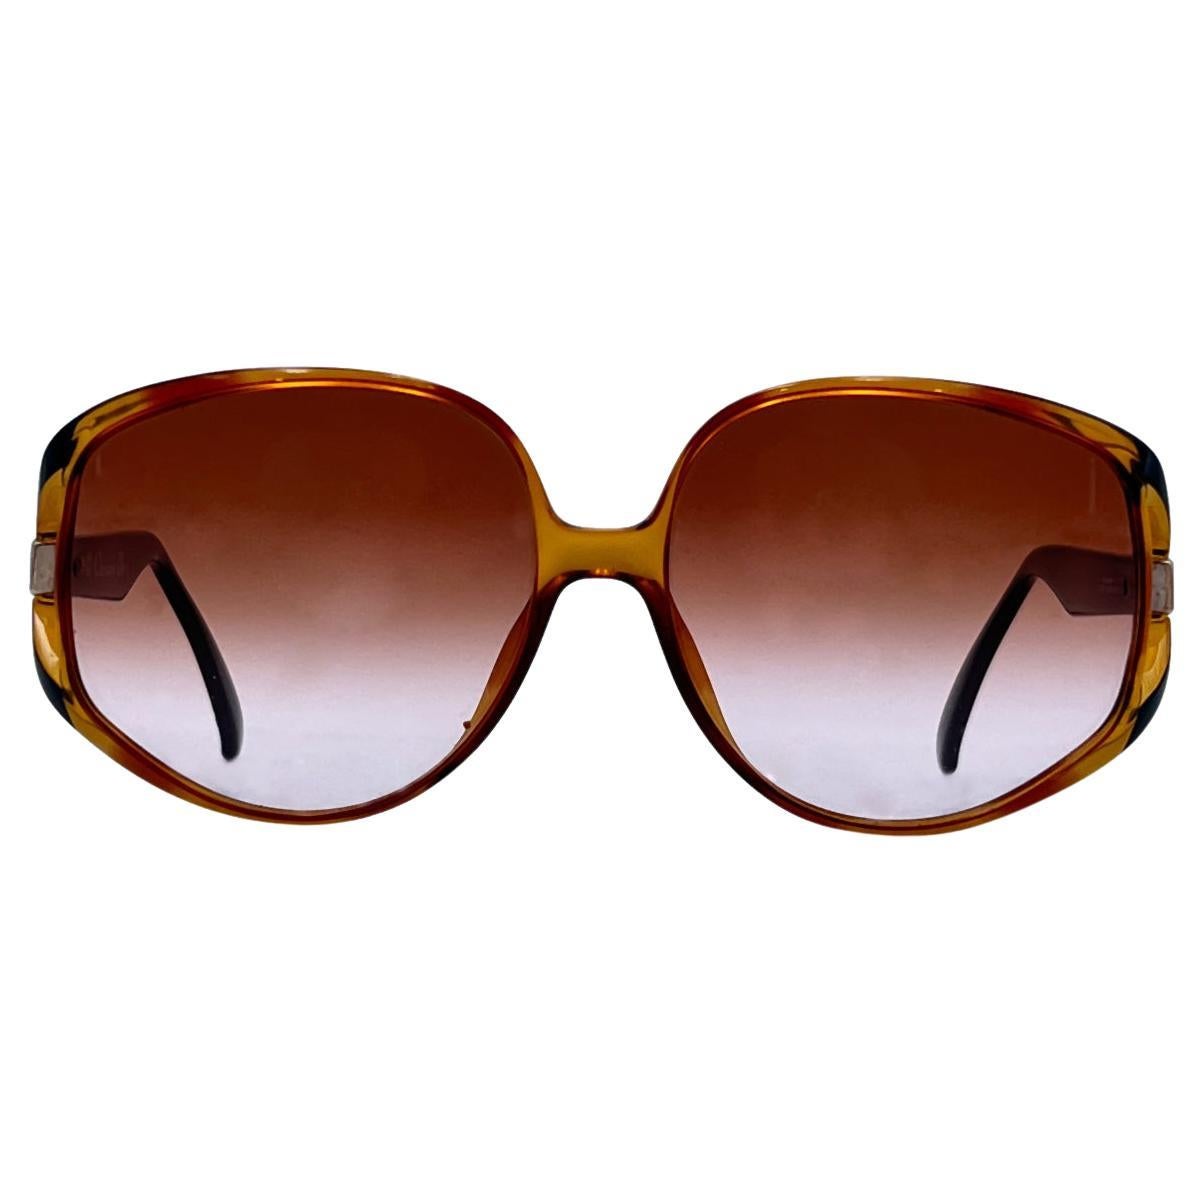  Christian Dior Vintage Oversized Brown Sunglasses mod. 2320 62/16